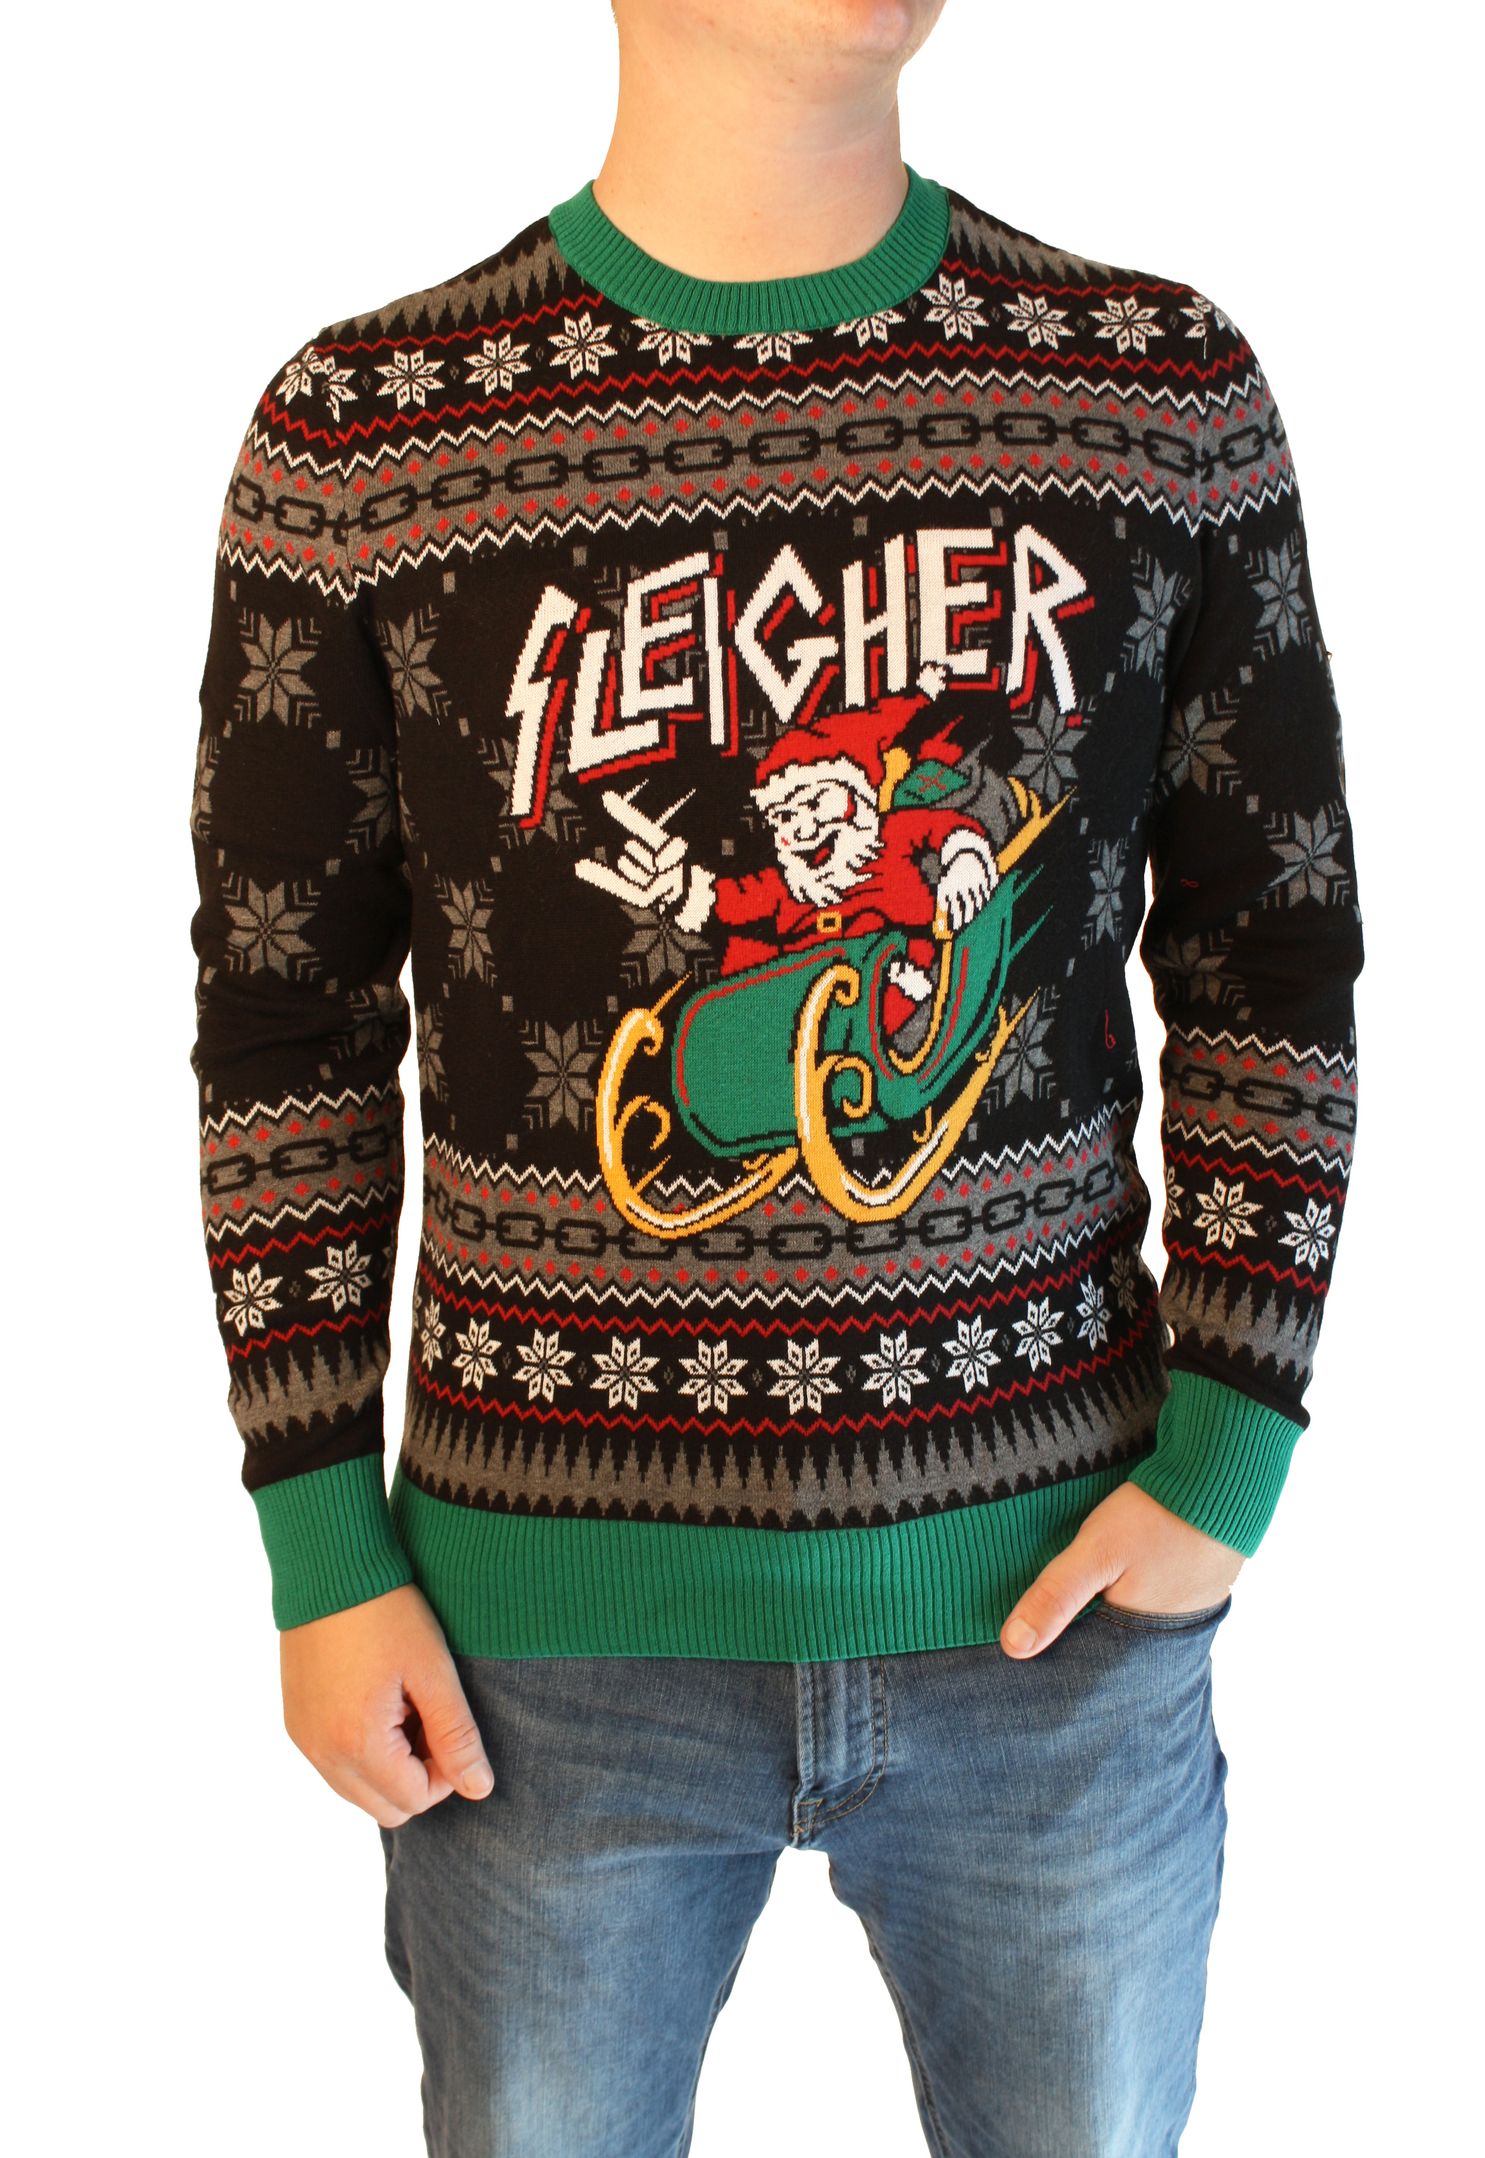 Ugly Christmas Sweater Men'S Xmas Metal Sleigher Santa Sleigh ...